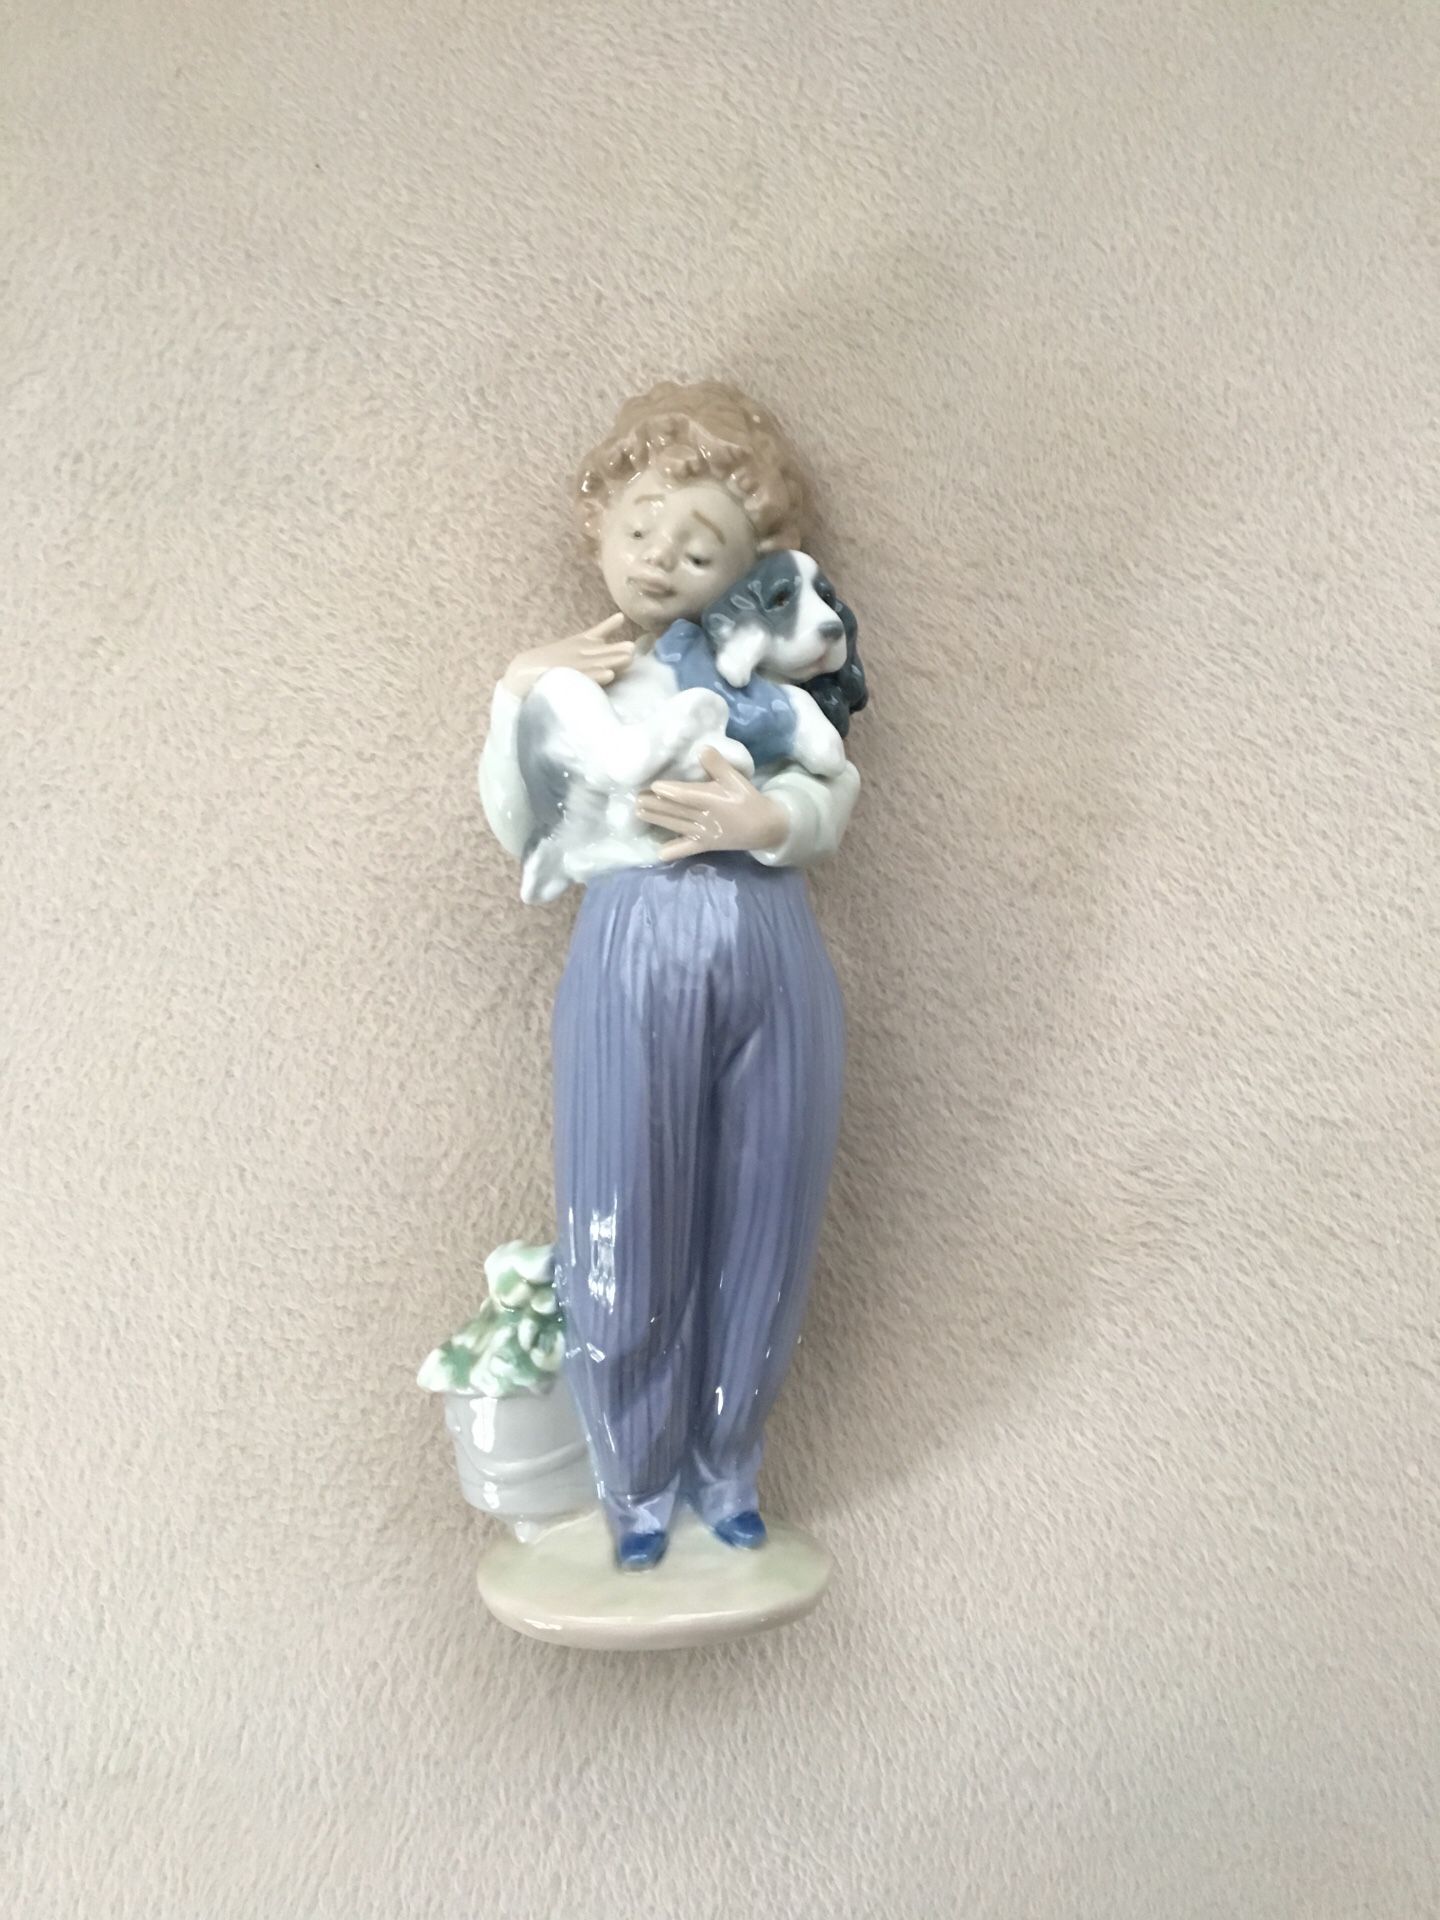 Lladro “My Buddy” Figurine